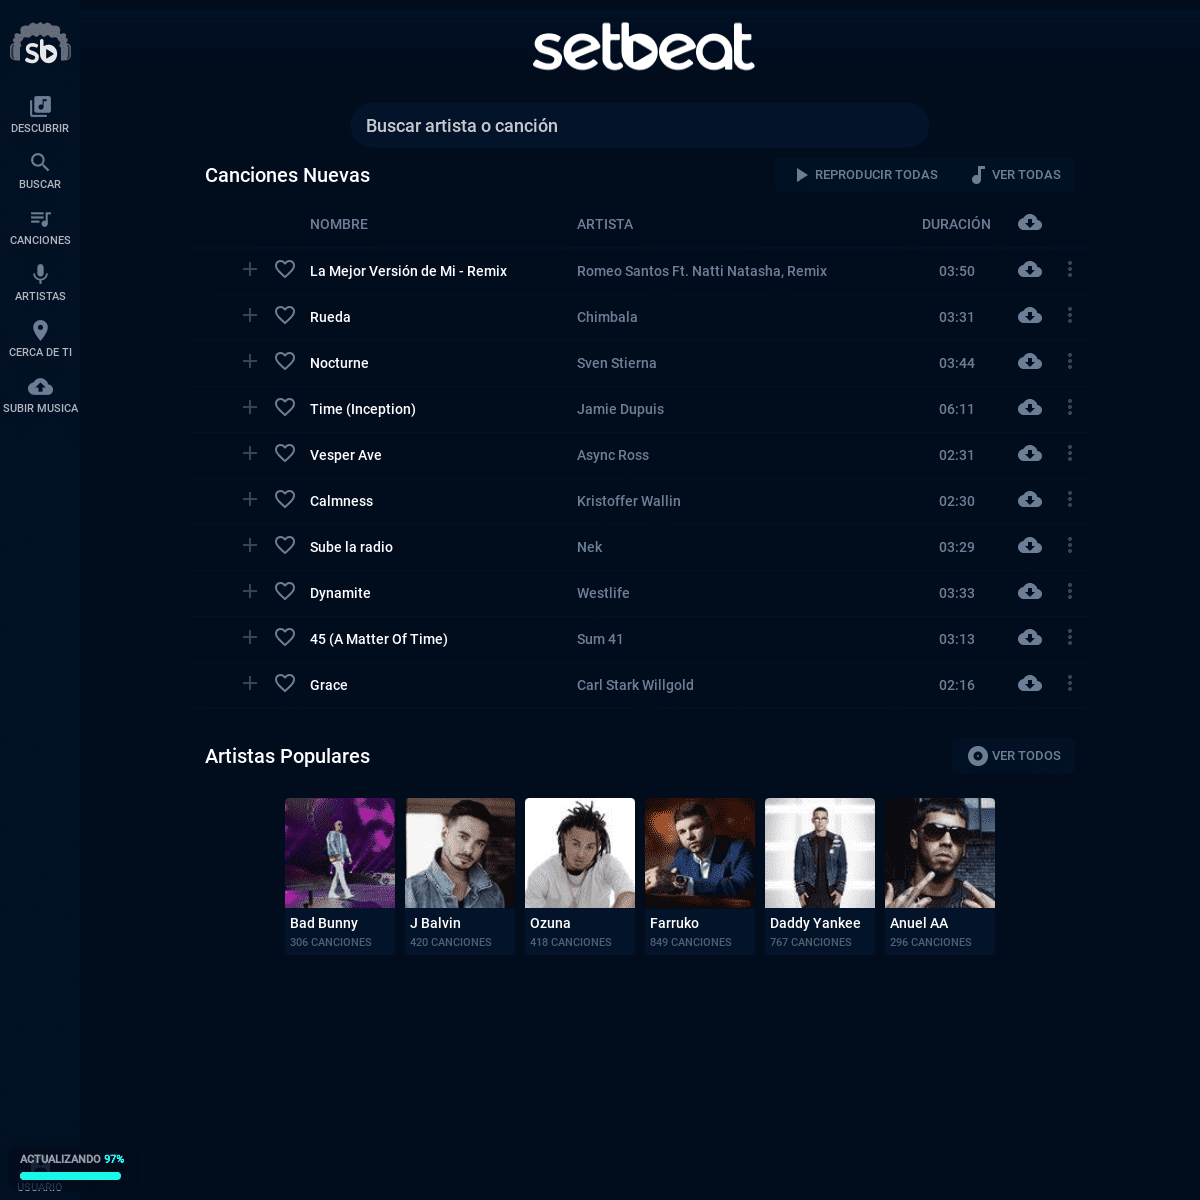 A complete backup of setbeat.com